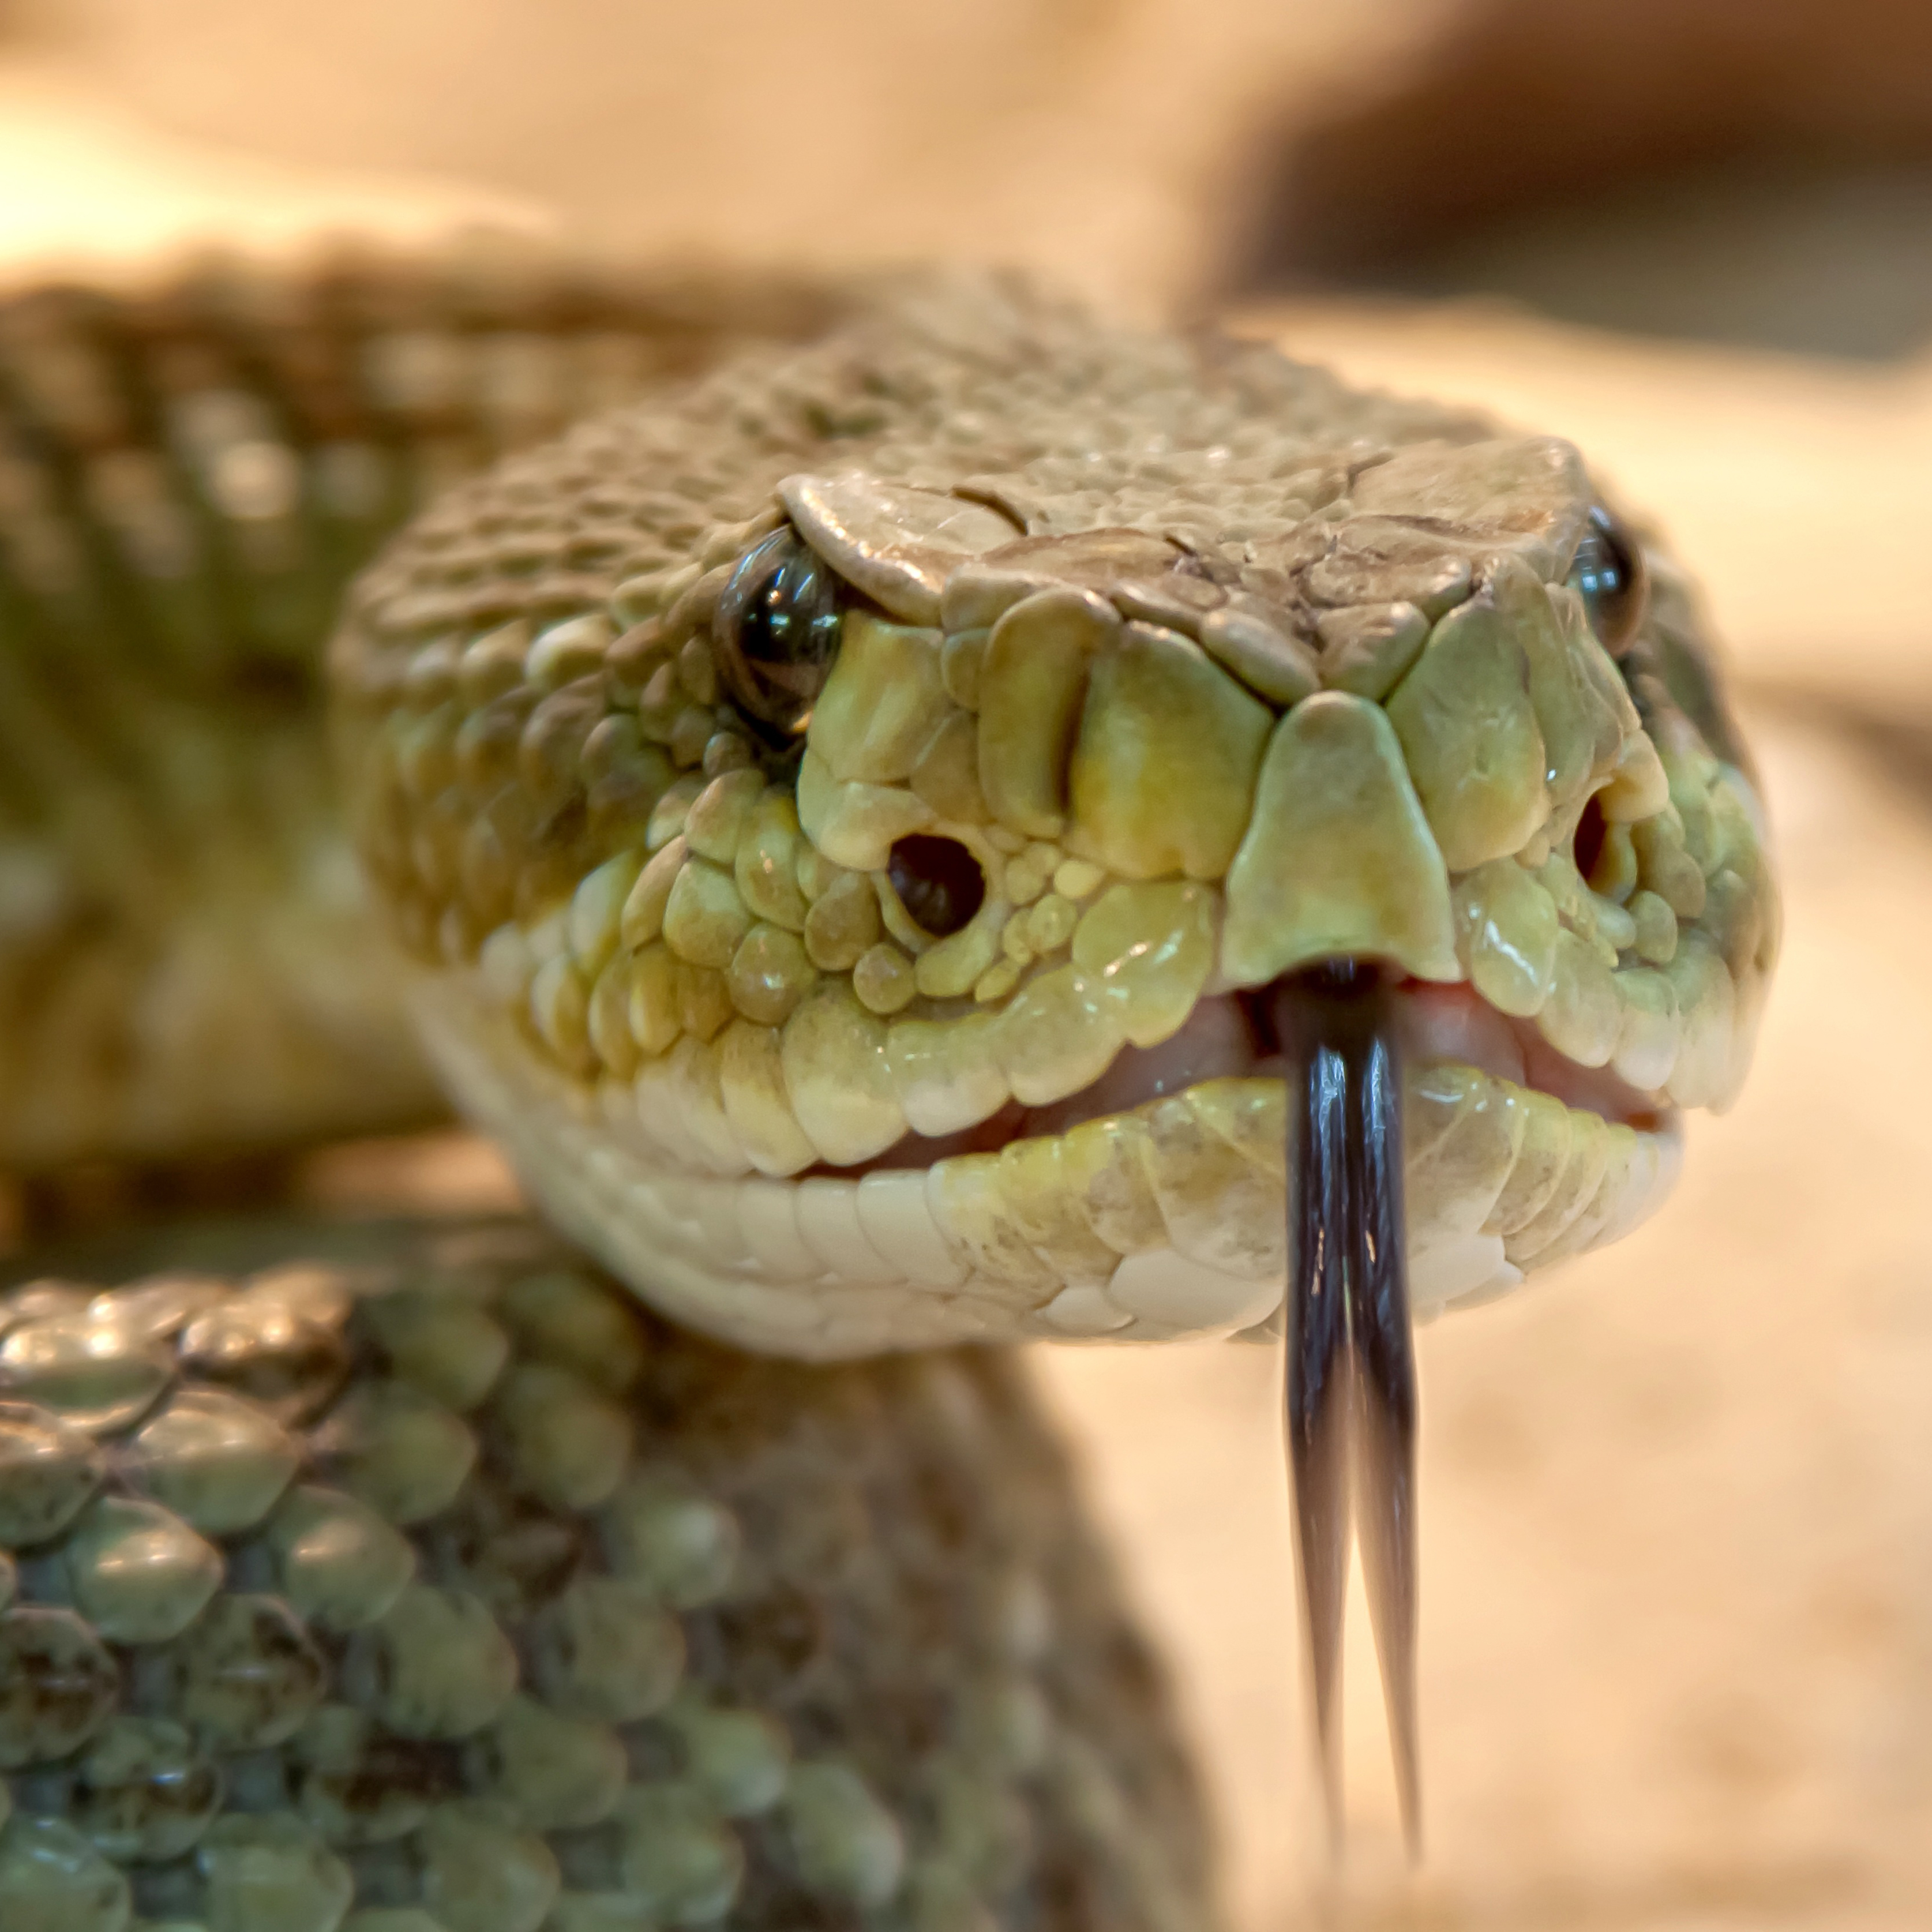 Слушать про змей. Змеи фото. Домашняя Кобра. Фото мудрой змеи. Голова гремучей змеи.